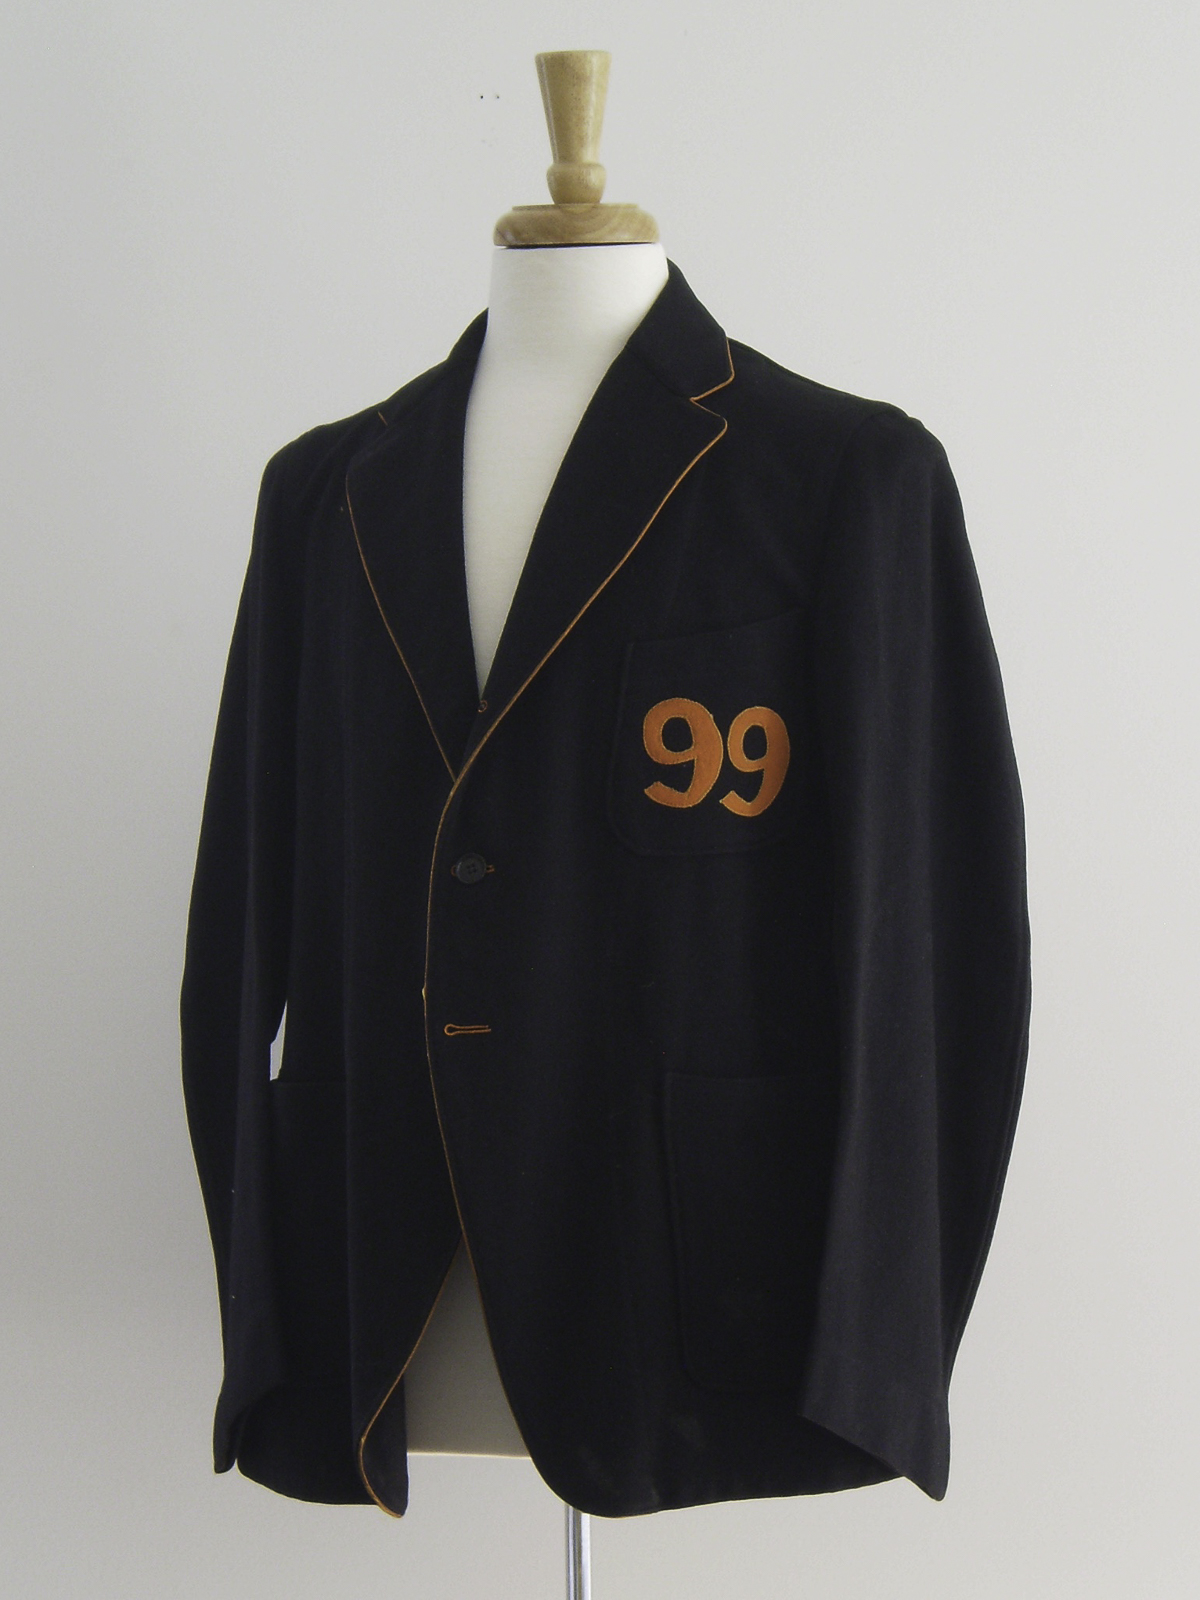 1899 Reunion Jacket